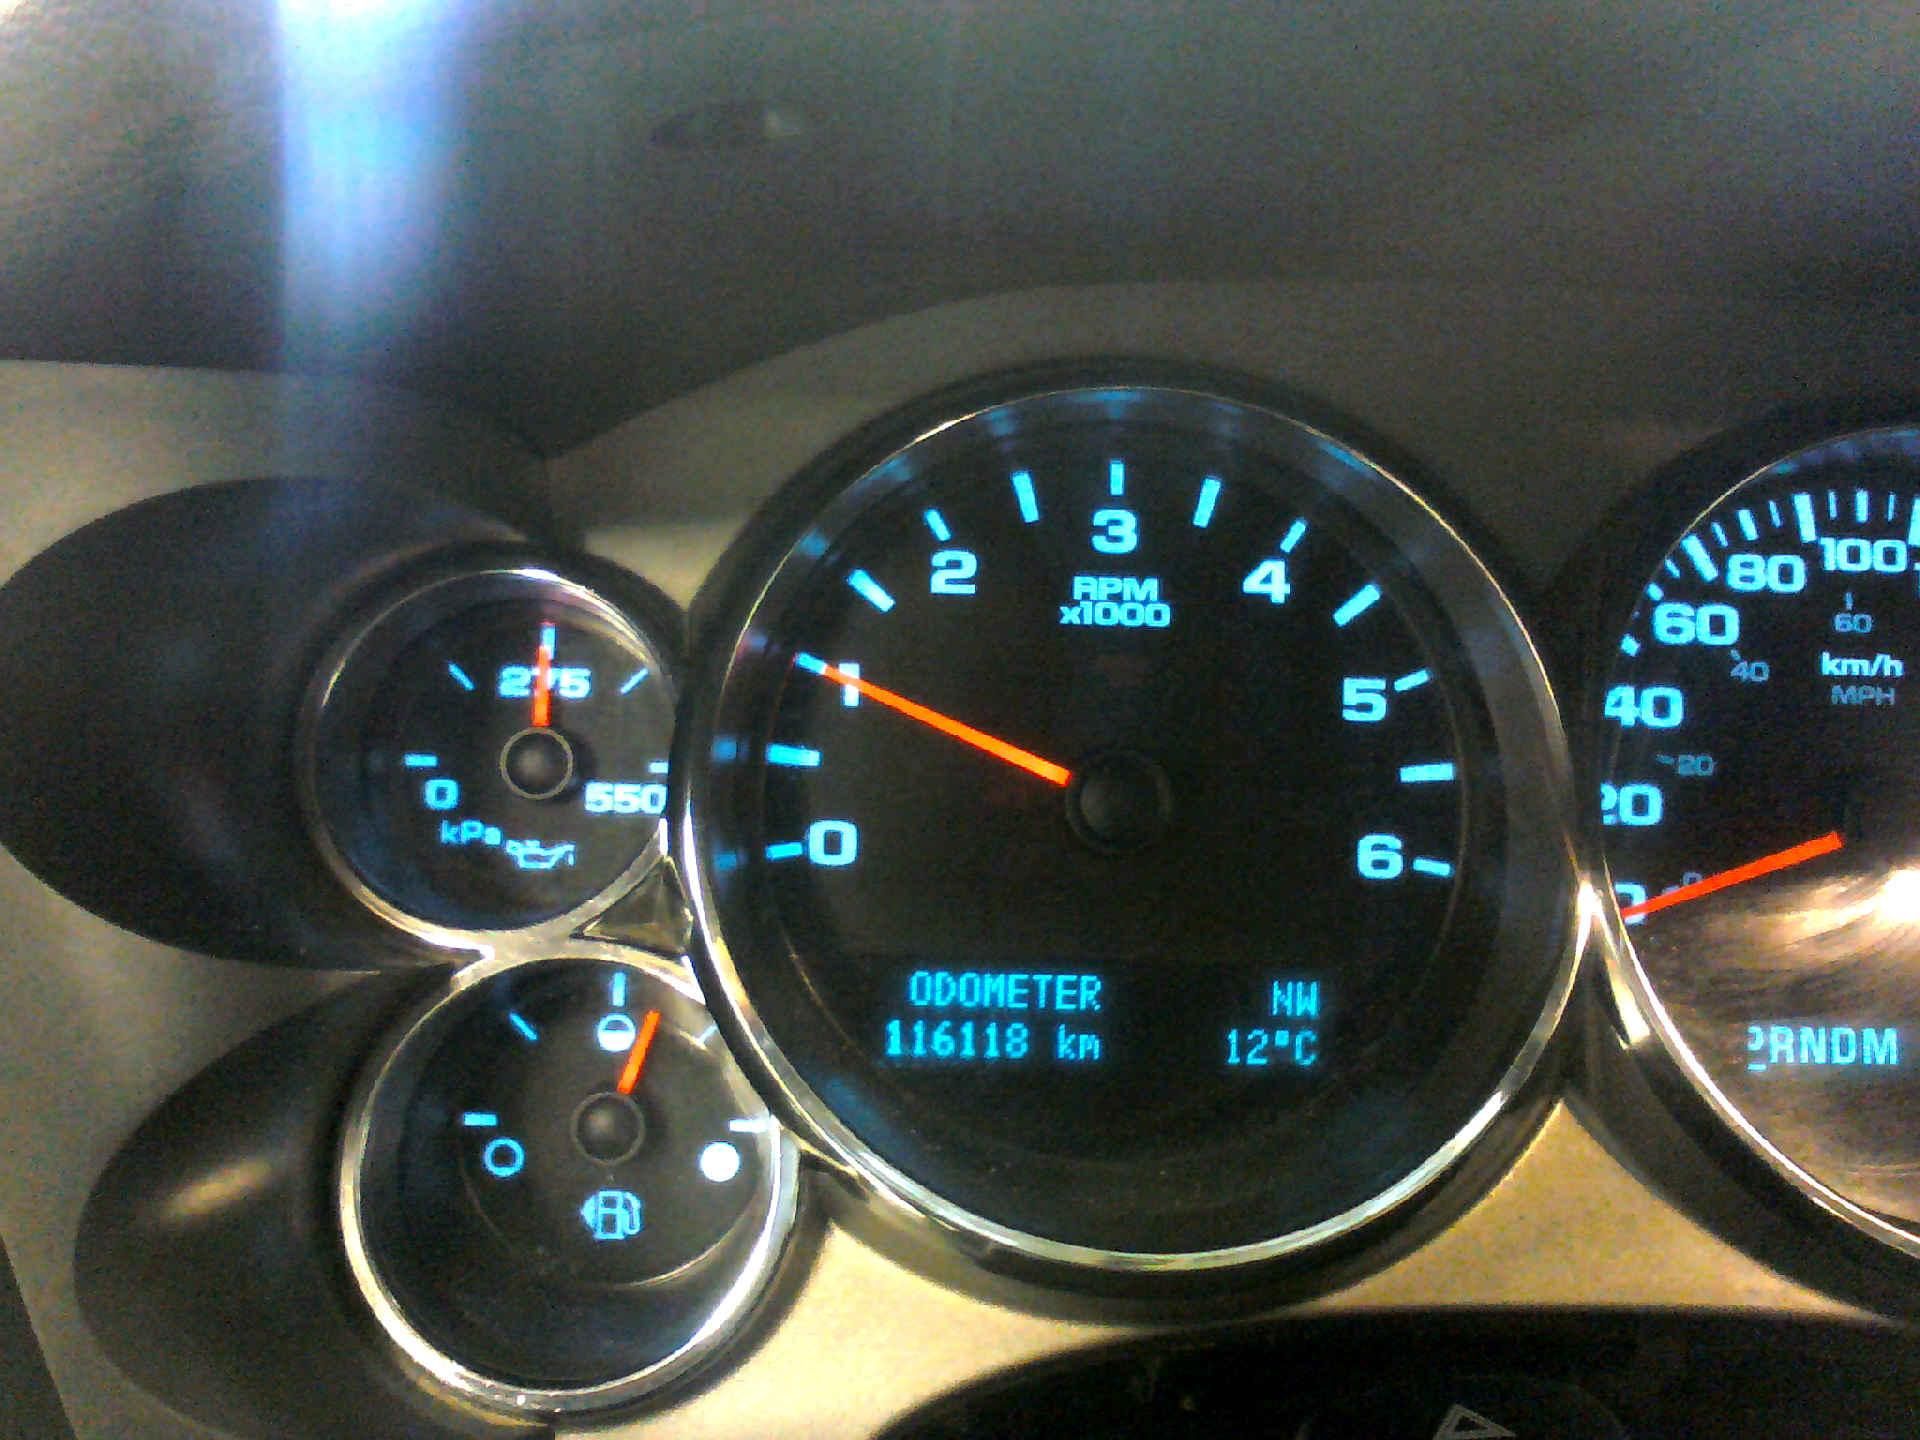 2012 GMC SIERRA 2500HD SLE QUAD CAB 4WD 6.0L V8 OHV 16V FFV AUTOMATIC SN:1GT220CG1CZ173635 OPTIONS: - Image 7 of 9